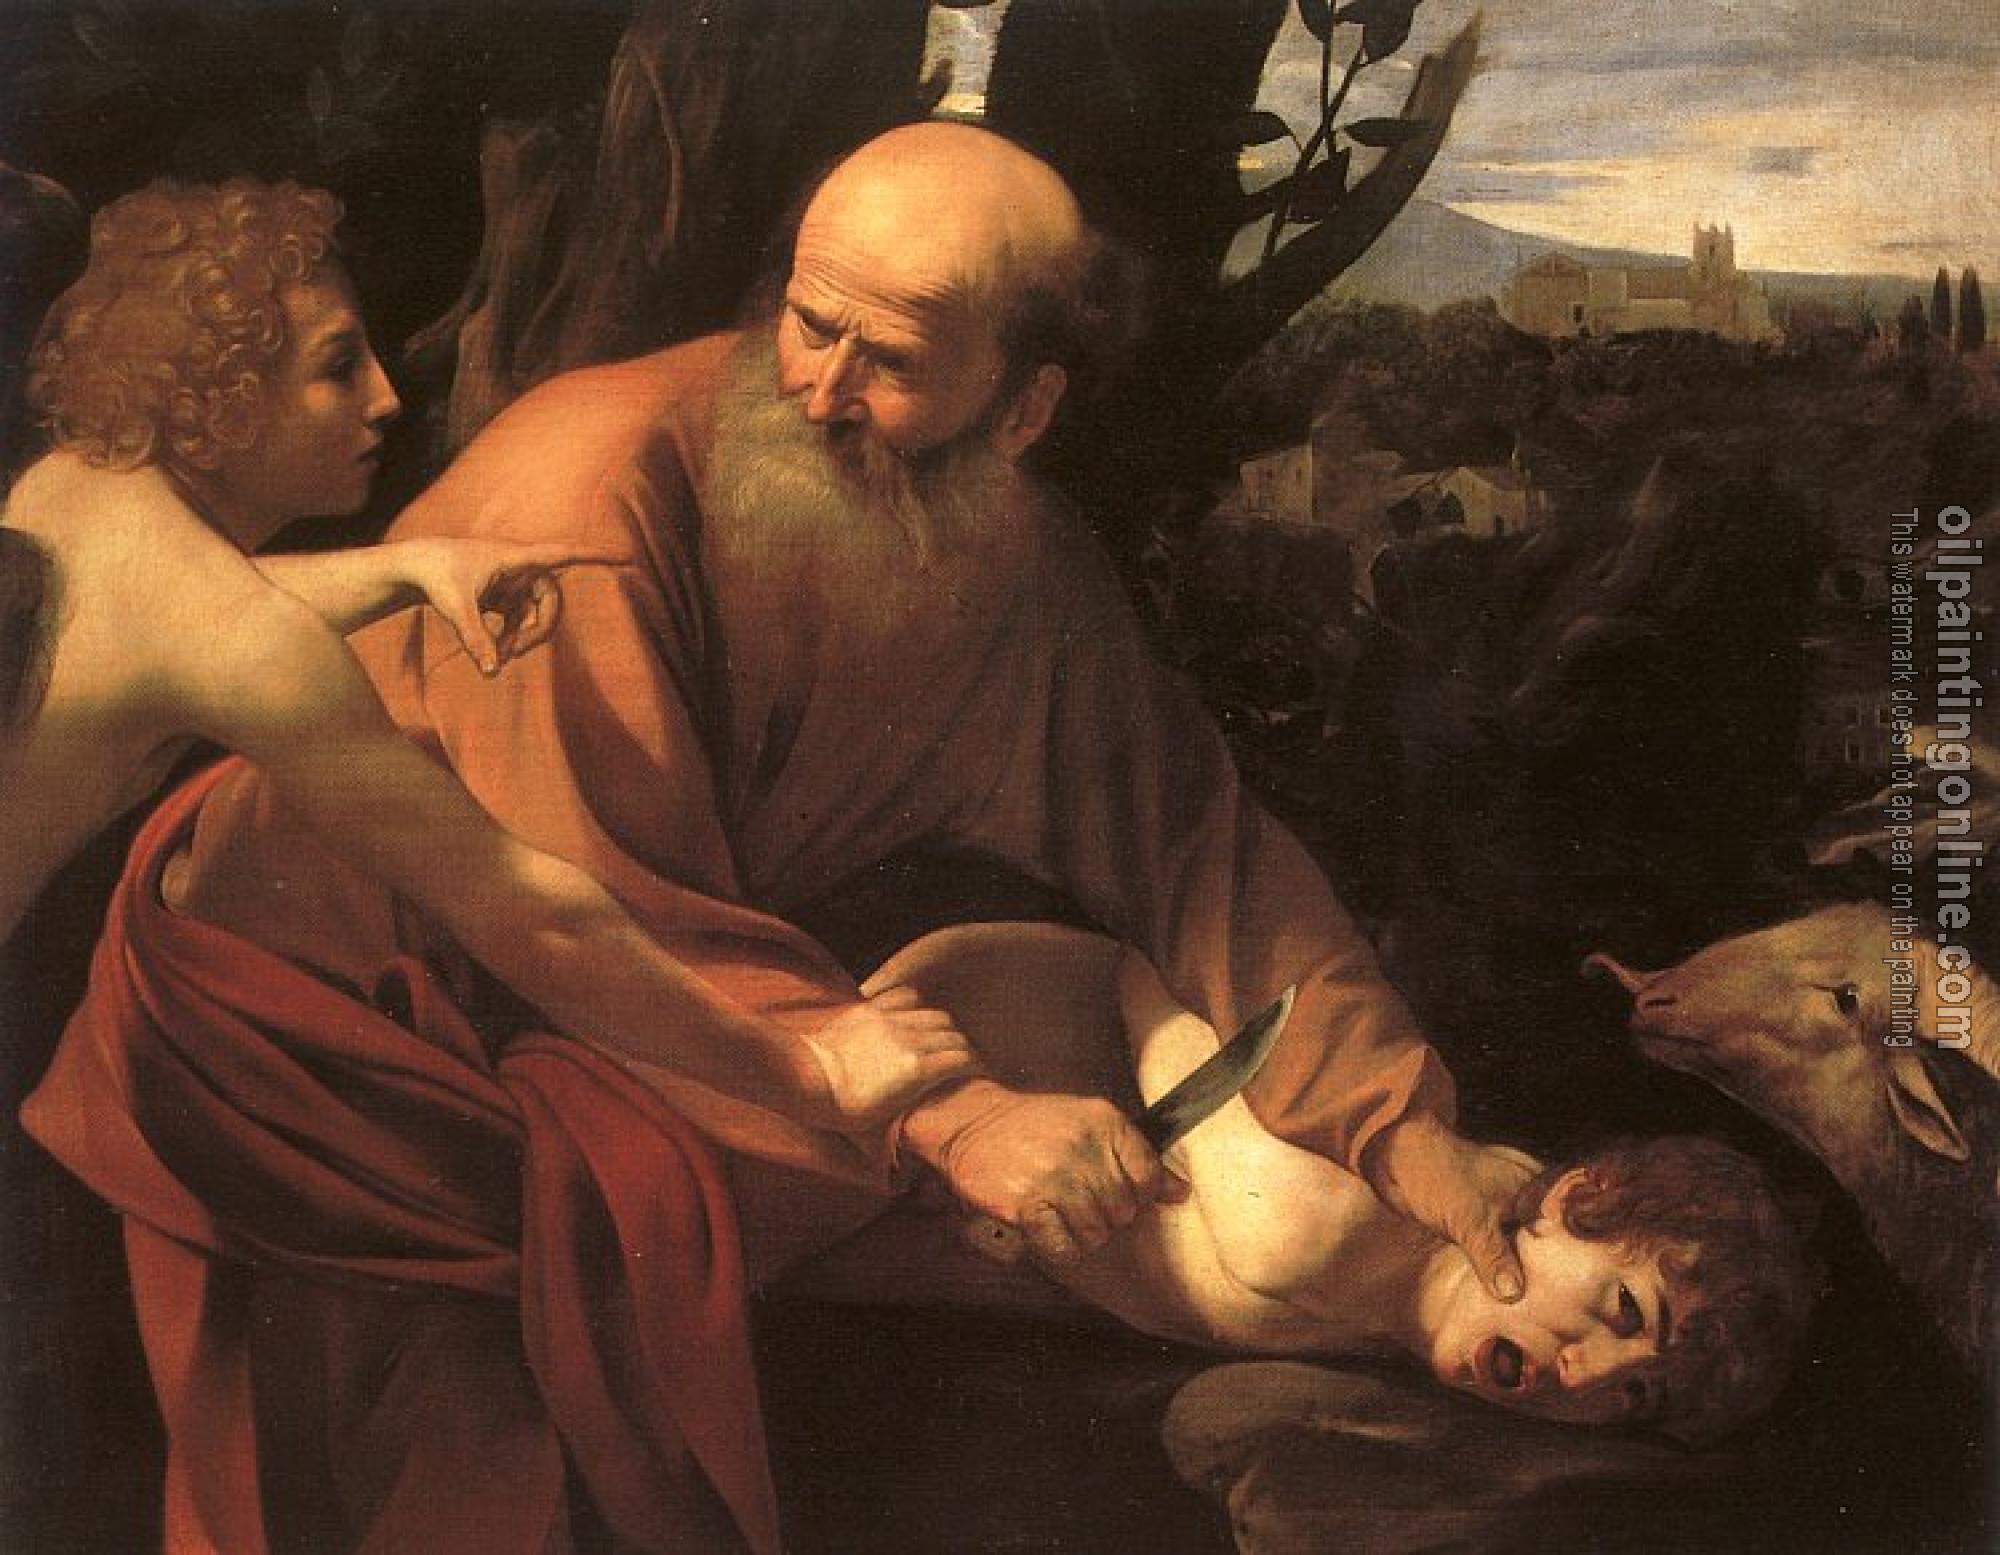 Caravaggio - The Sacrifice of Isaac